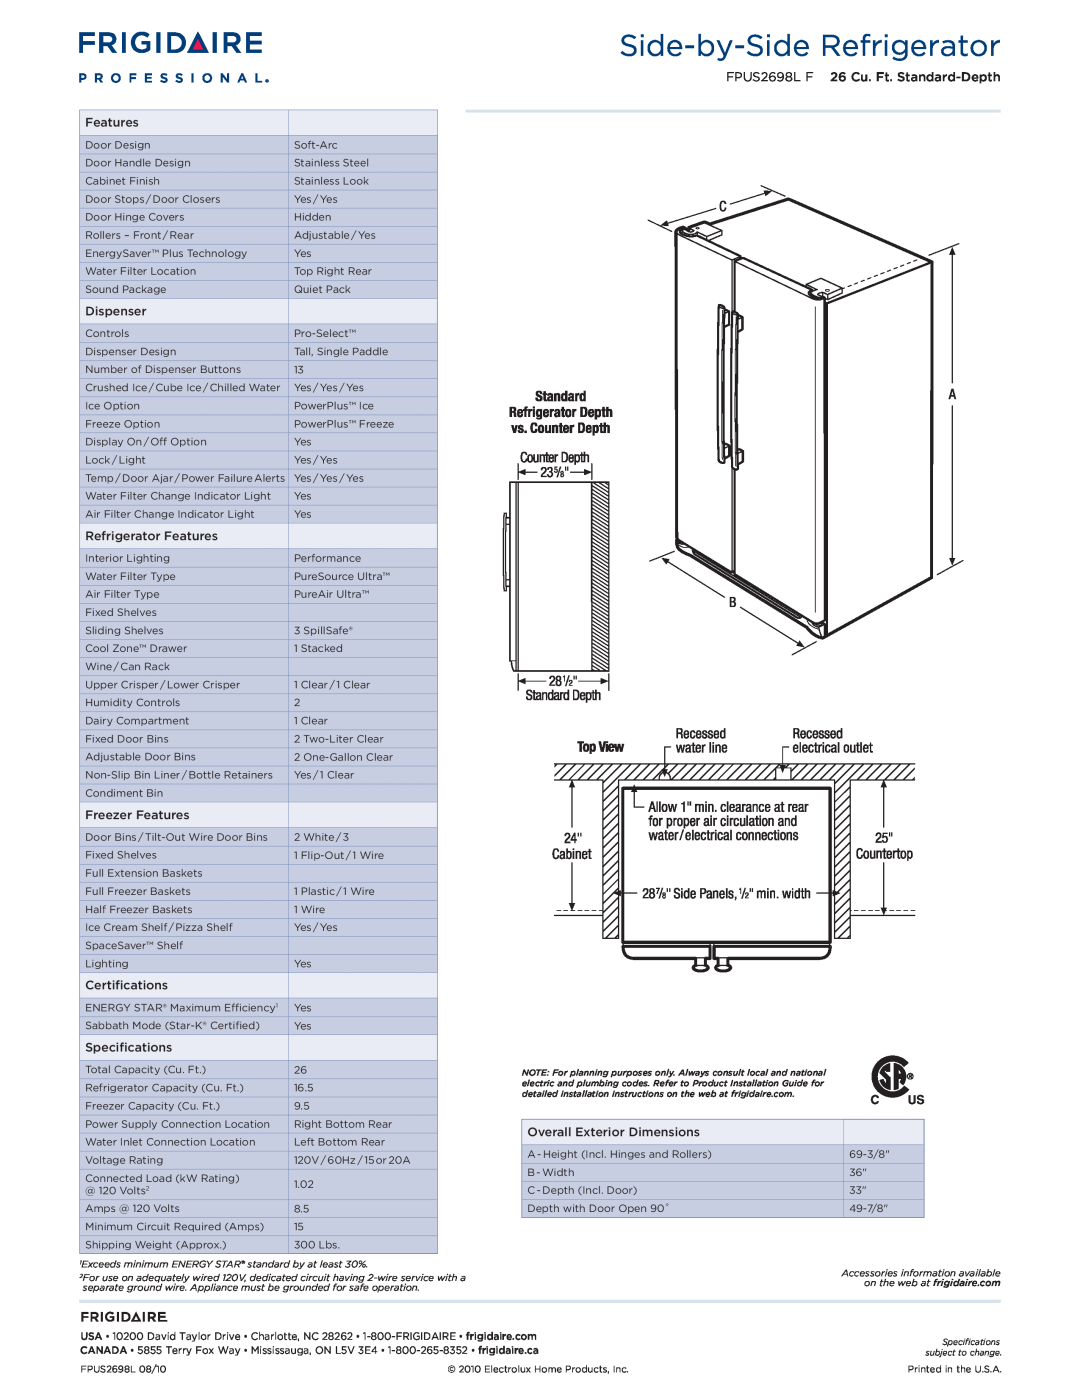 Frigidaire dimensions Side-by-SideRefrigerator, FPUS2698L F 26 Cu. Ft. Standard-Depth 